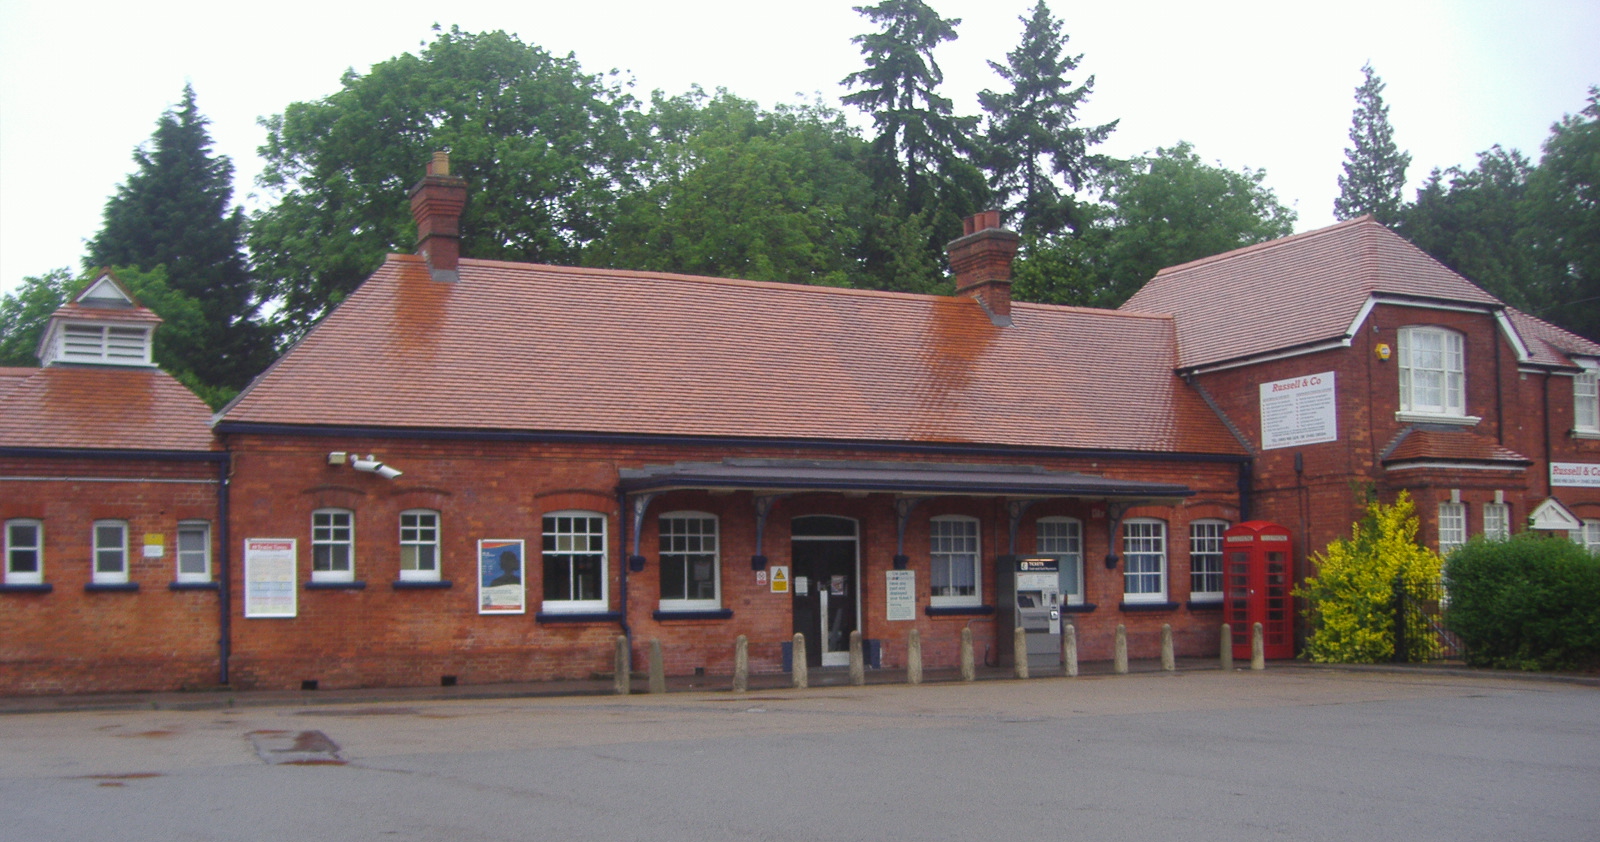 Horsley railway station